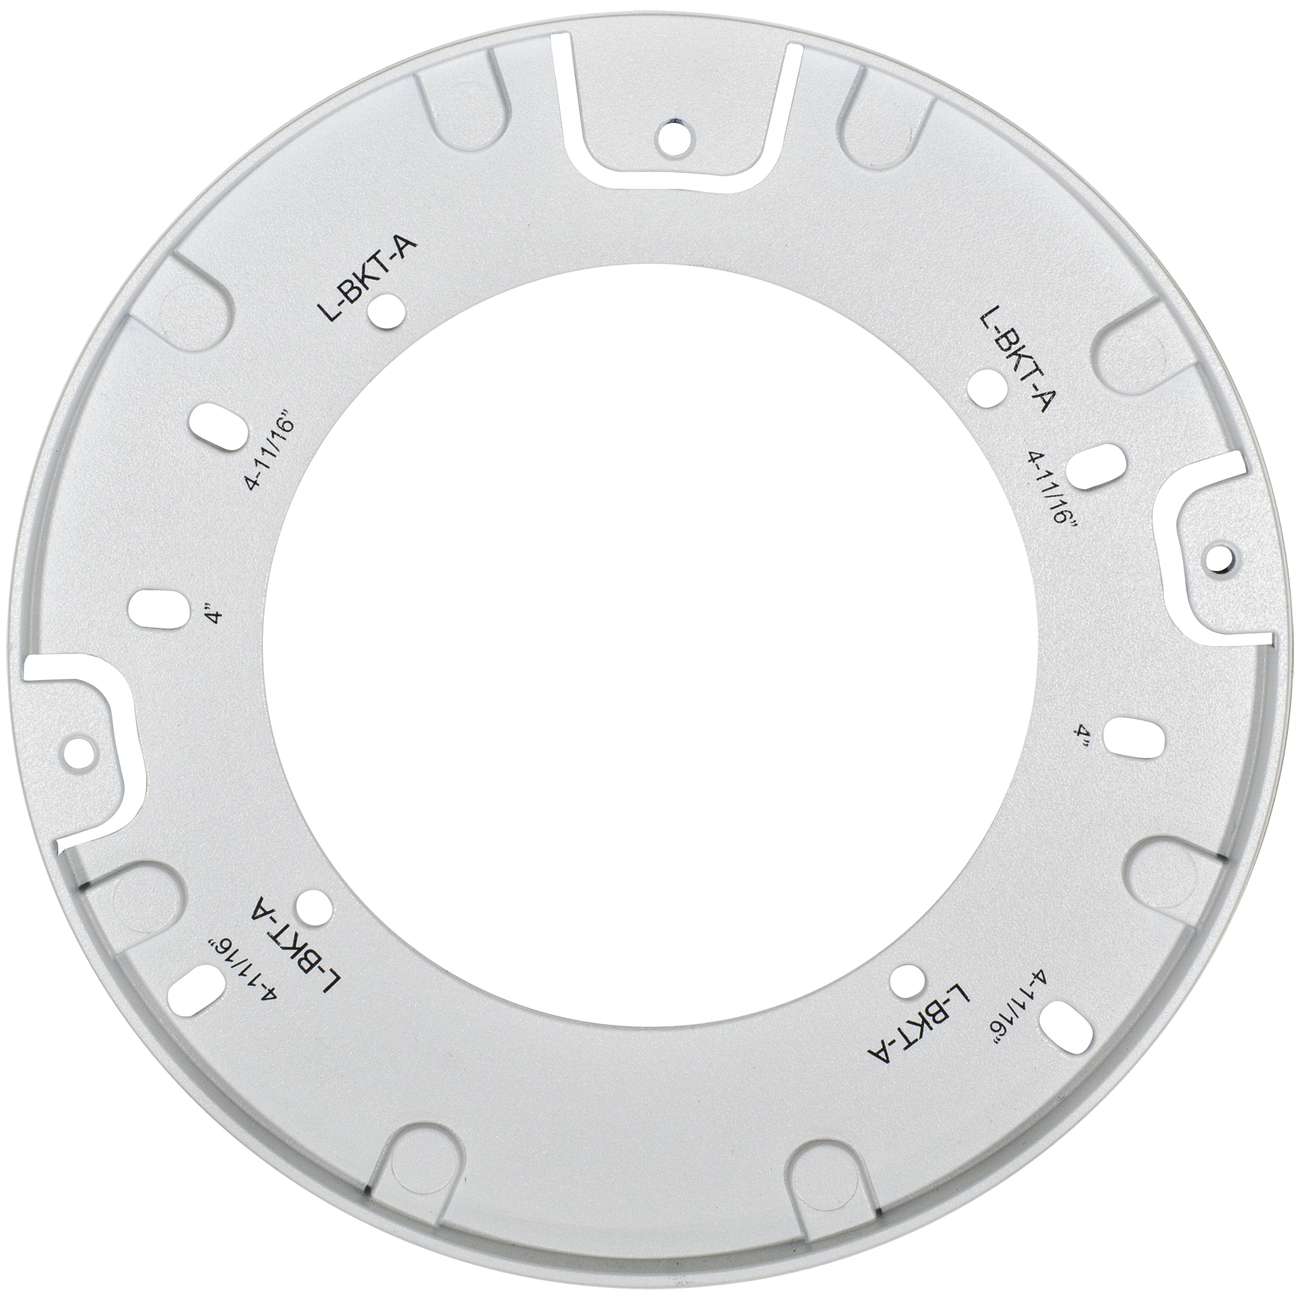 Vivotek Adaptor Ring For FD8162/FD8135H